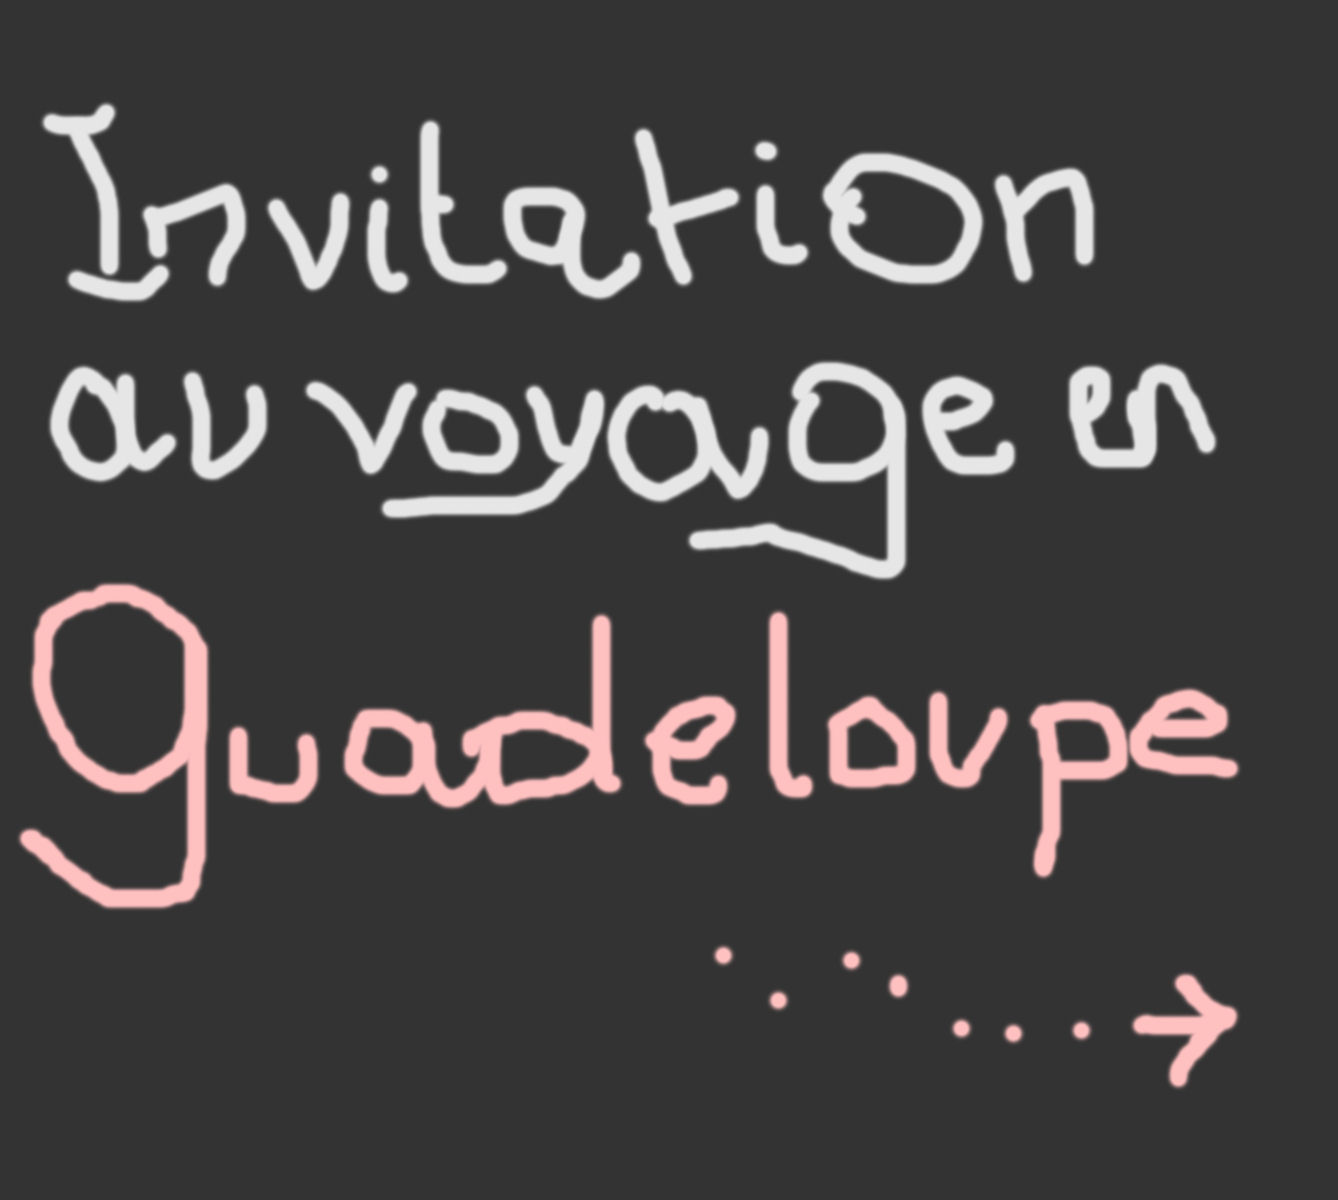 Invitation au voyage en Guadeloupe